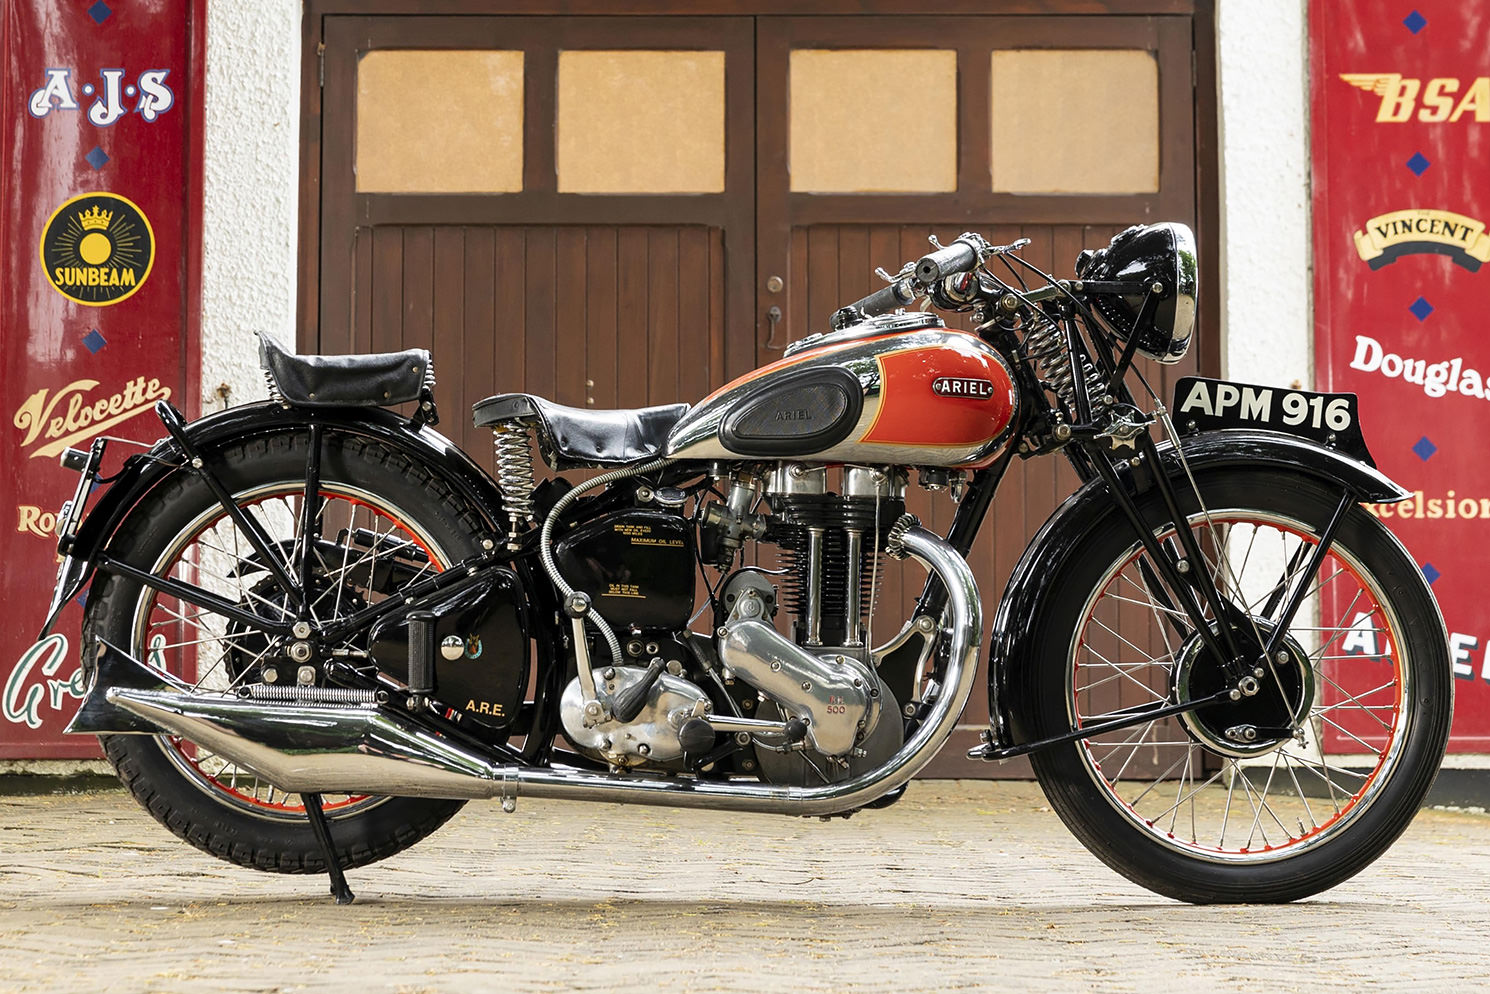 The Bonhams A.R.E. Classic Motorcycle Collection auction